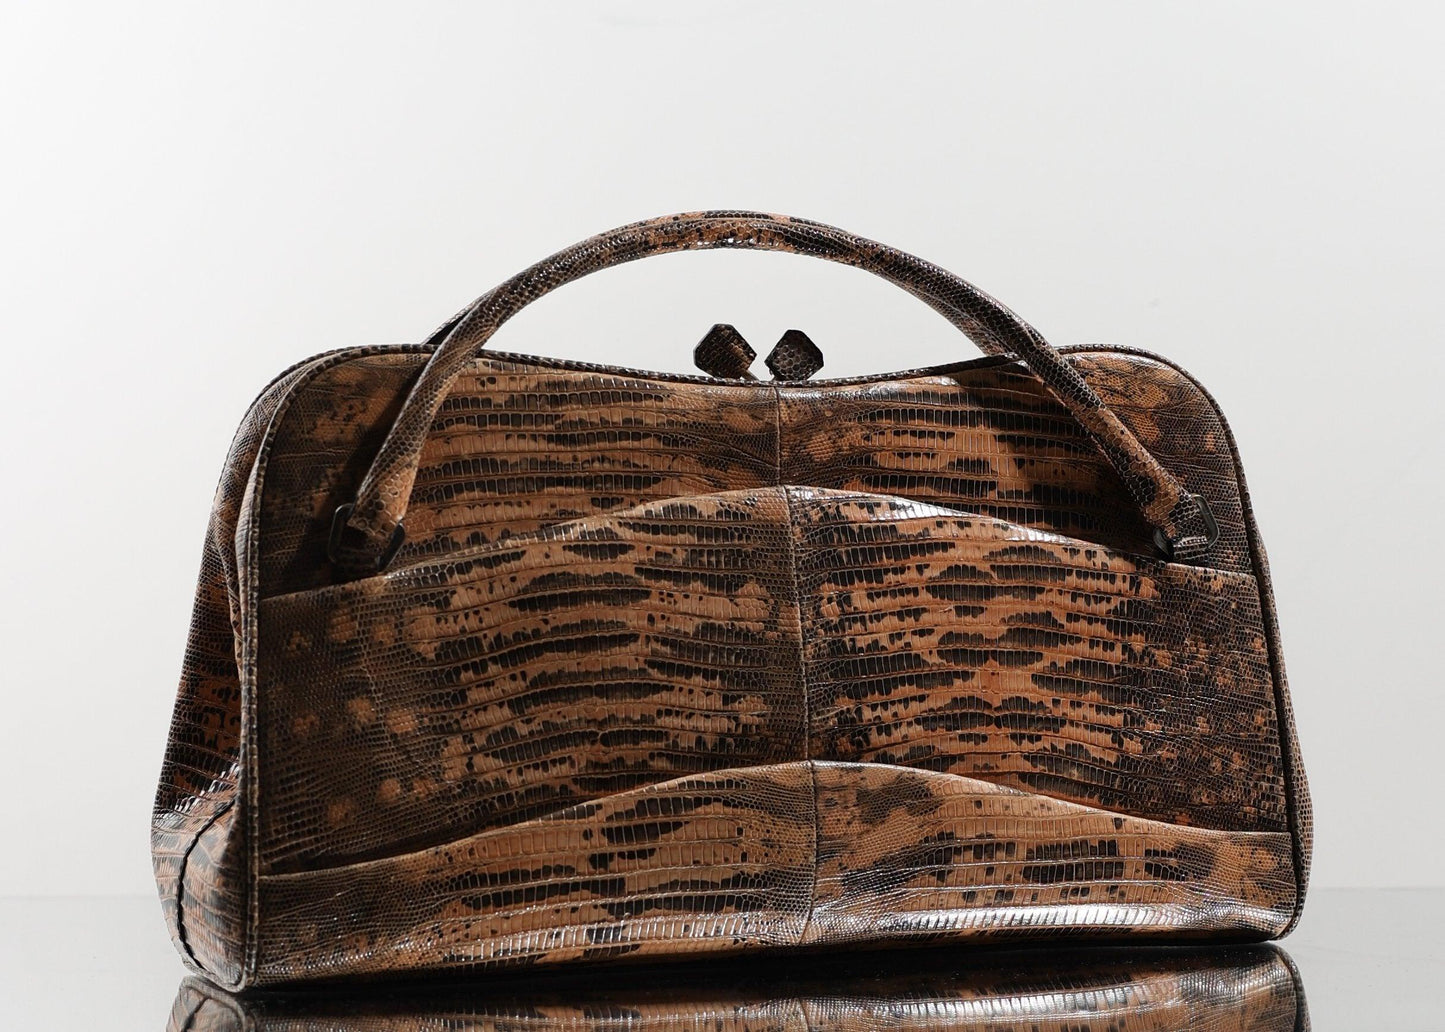 Prada Crocodile leather bag - Known Source